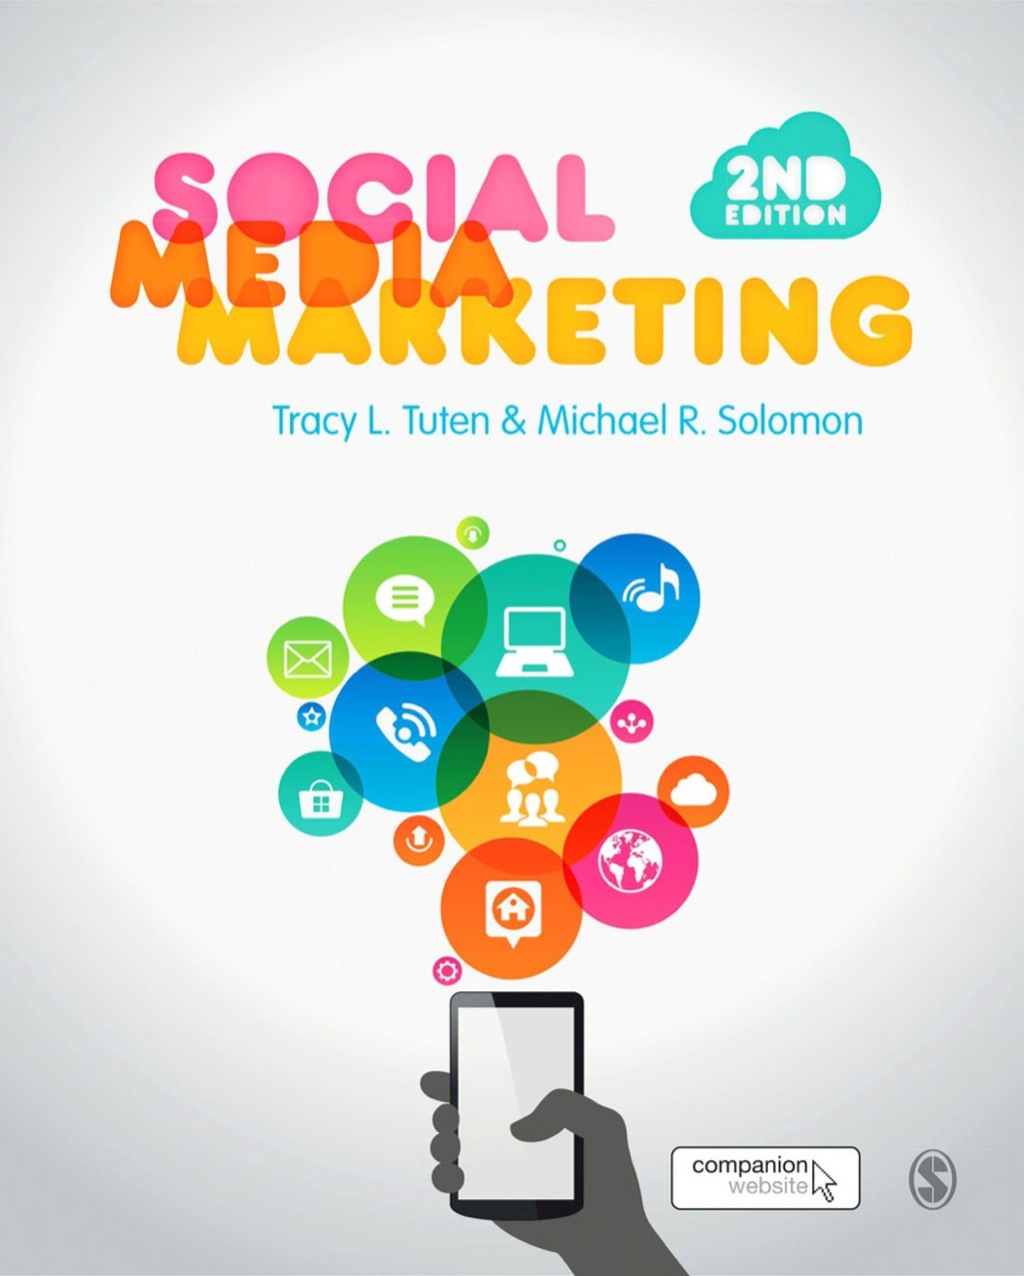 Social Media Marketing - 2nd Edition (eBook Rental)